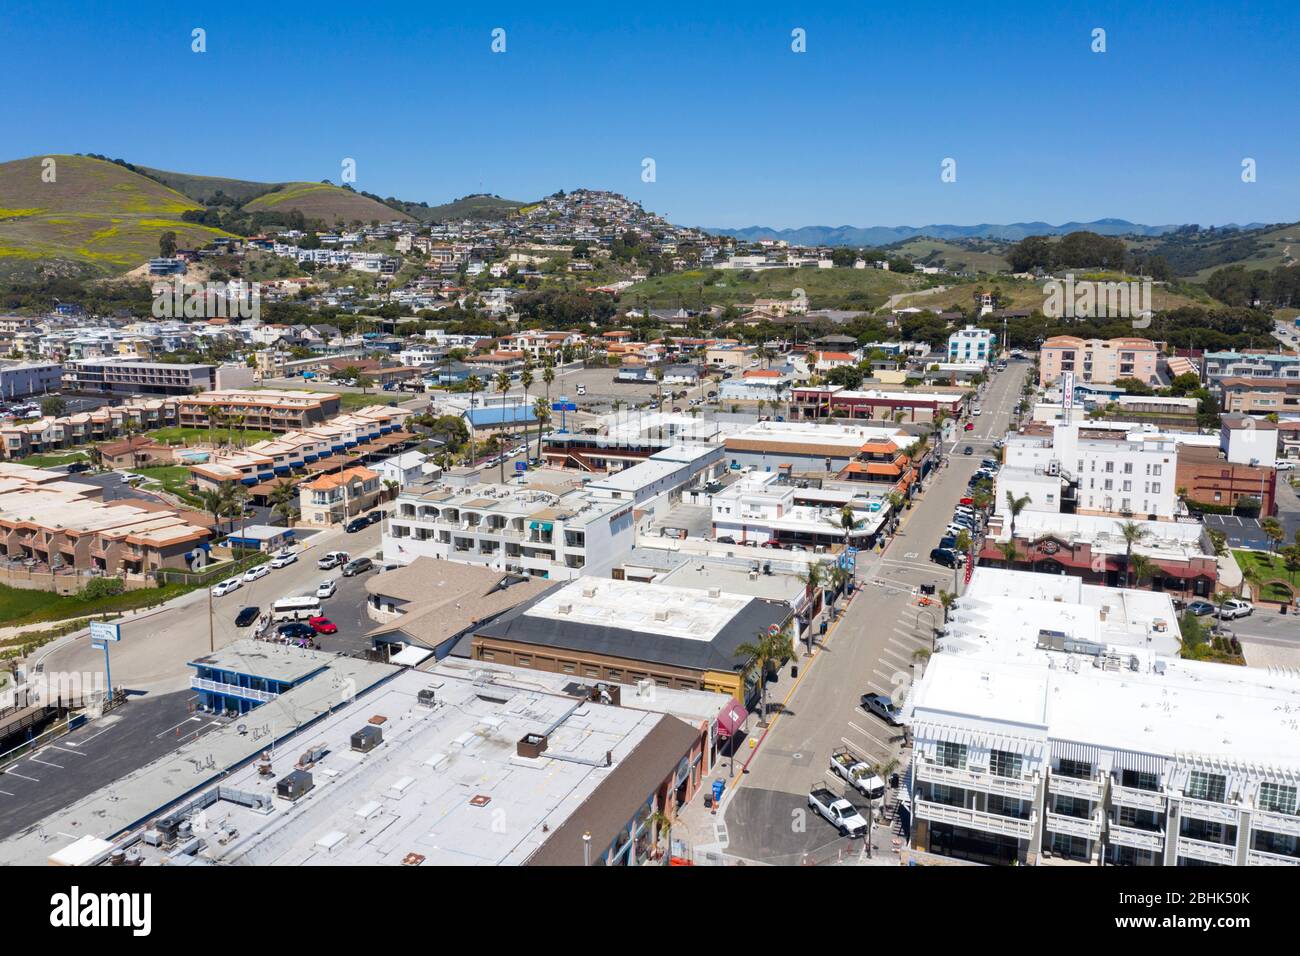 Aerail Views above downtown Pismo Beach along the central California coast Stock Photo